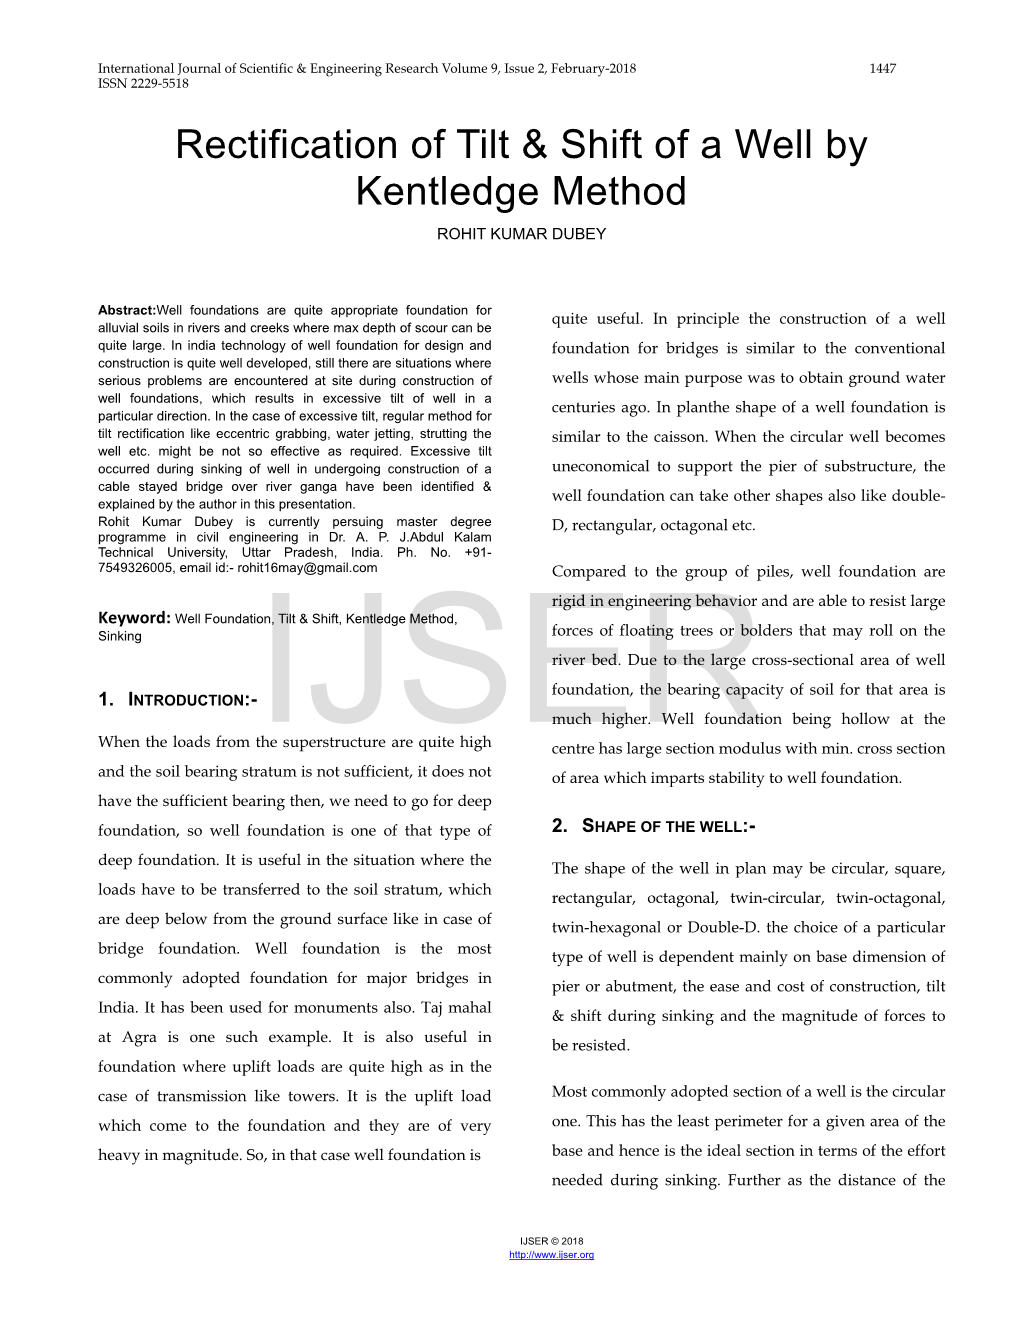 Rectification of Tilt & Shift of a Well by Kentledge Method